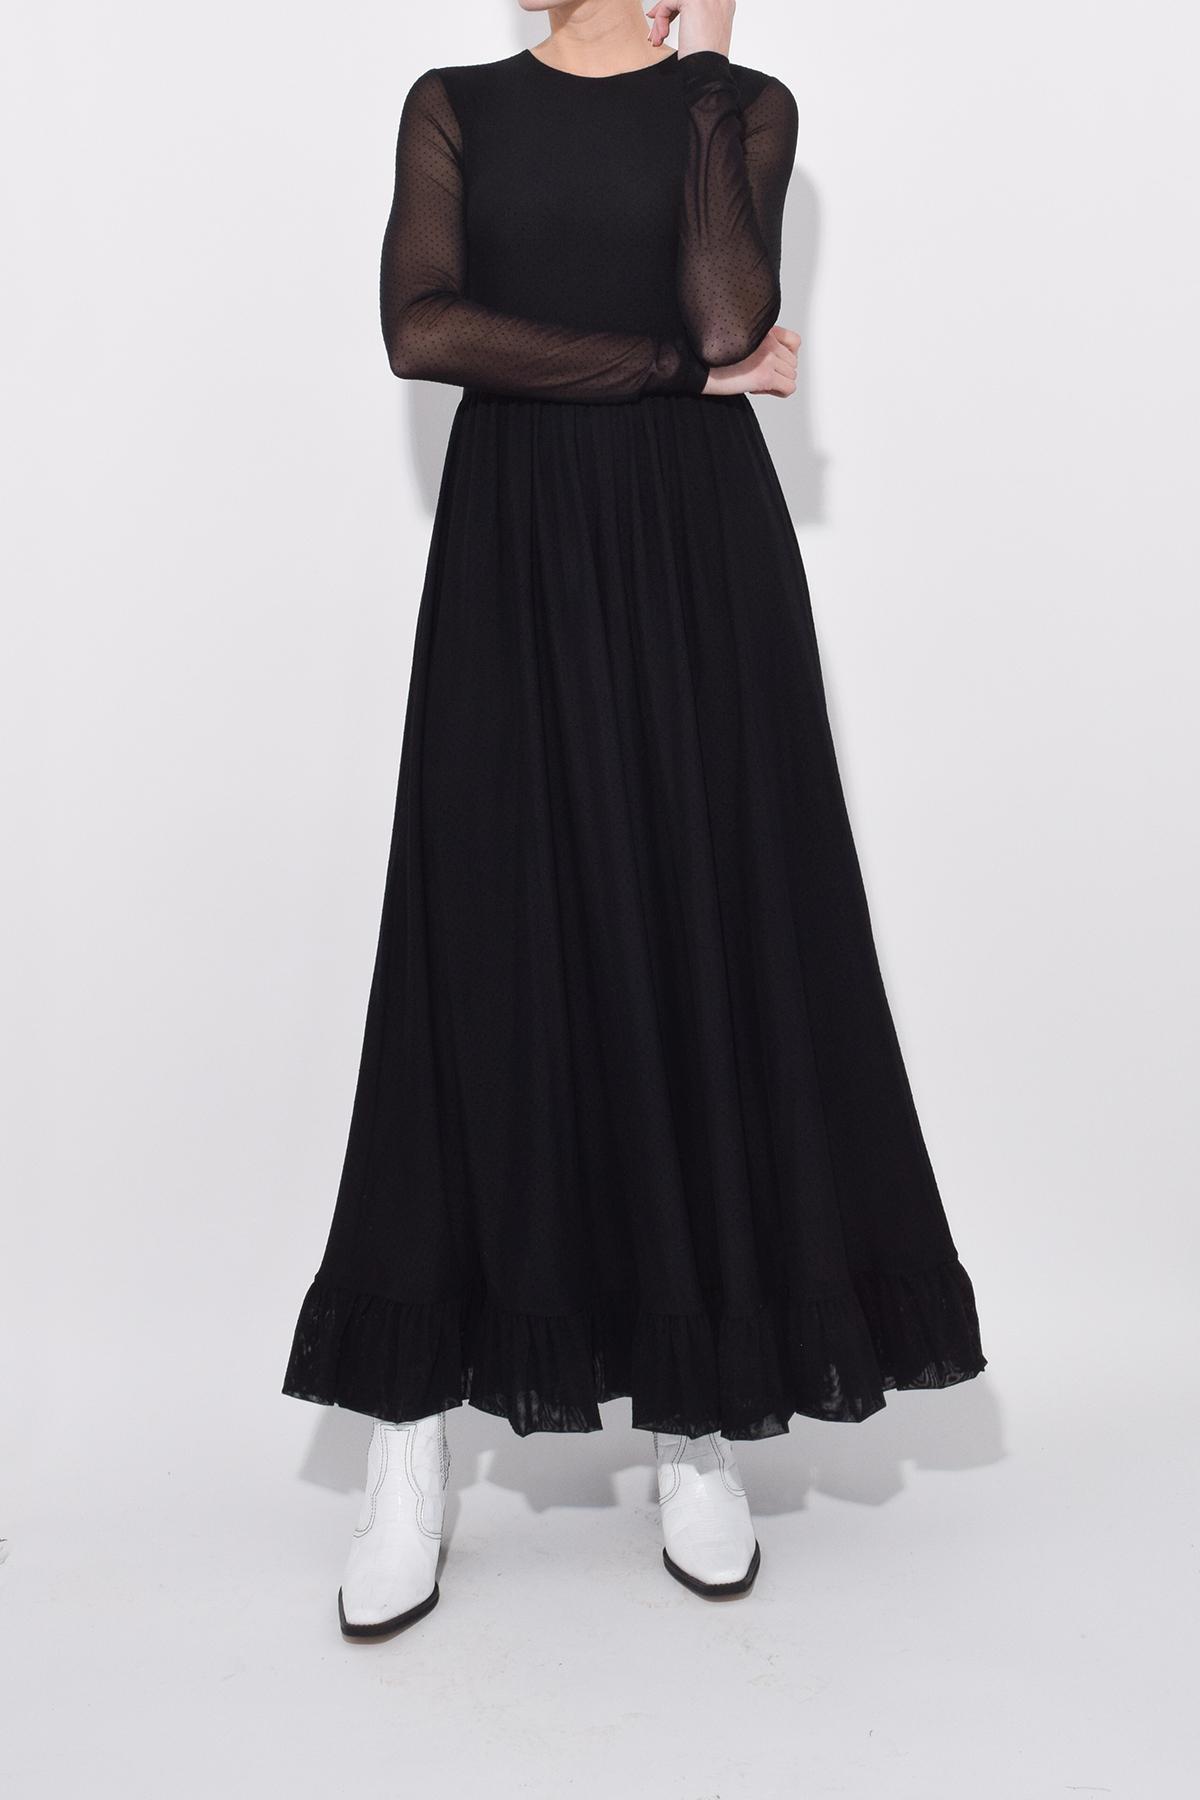 Ganni Synthetic Dot Mesh Maxi Dress In Black - Lyst